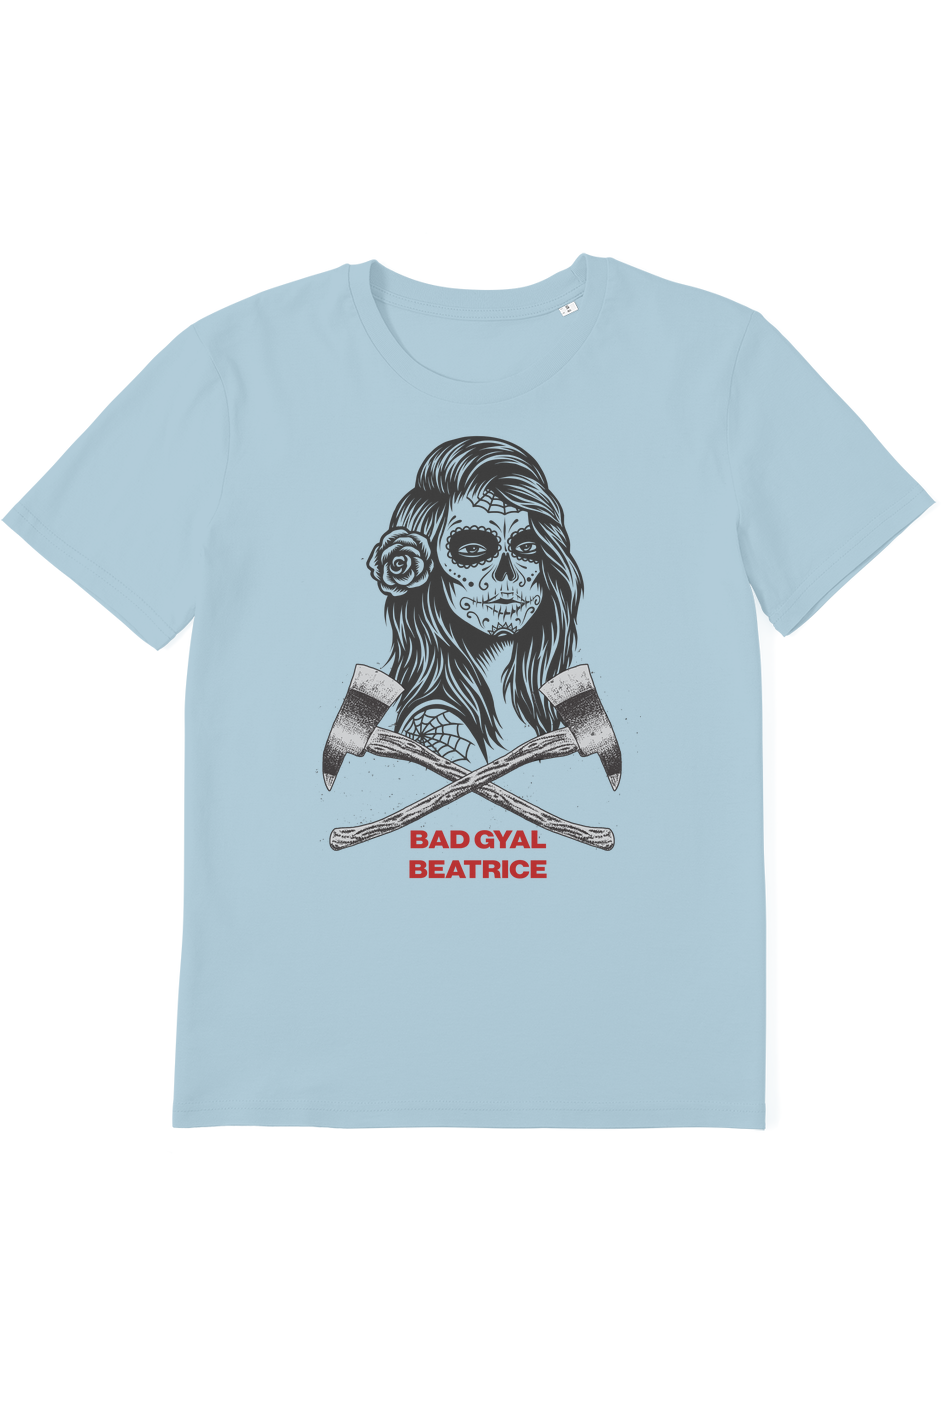 Bad Gyal Beatrice Organic T-Shirt vegan, sustainable, organic streetwear, - TRVTH ORGANIC CLOTHING